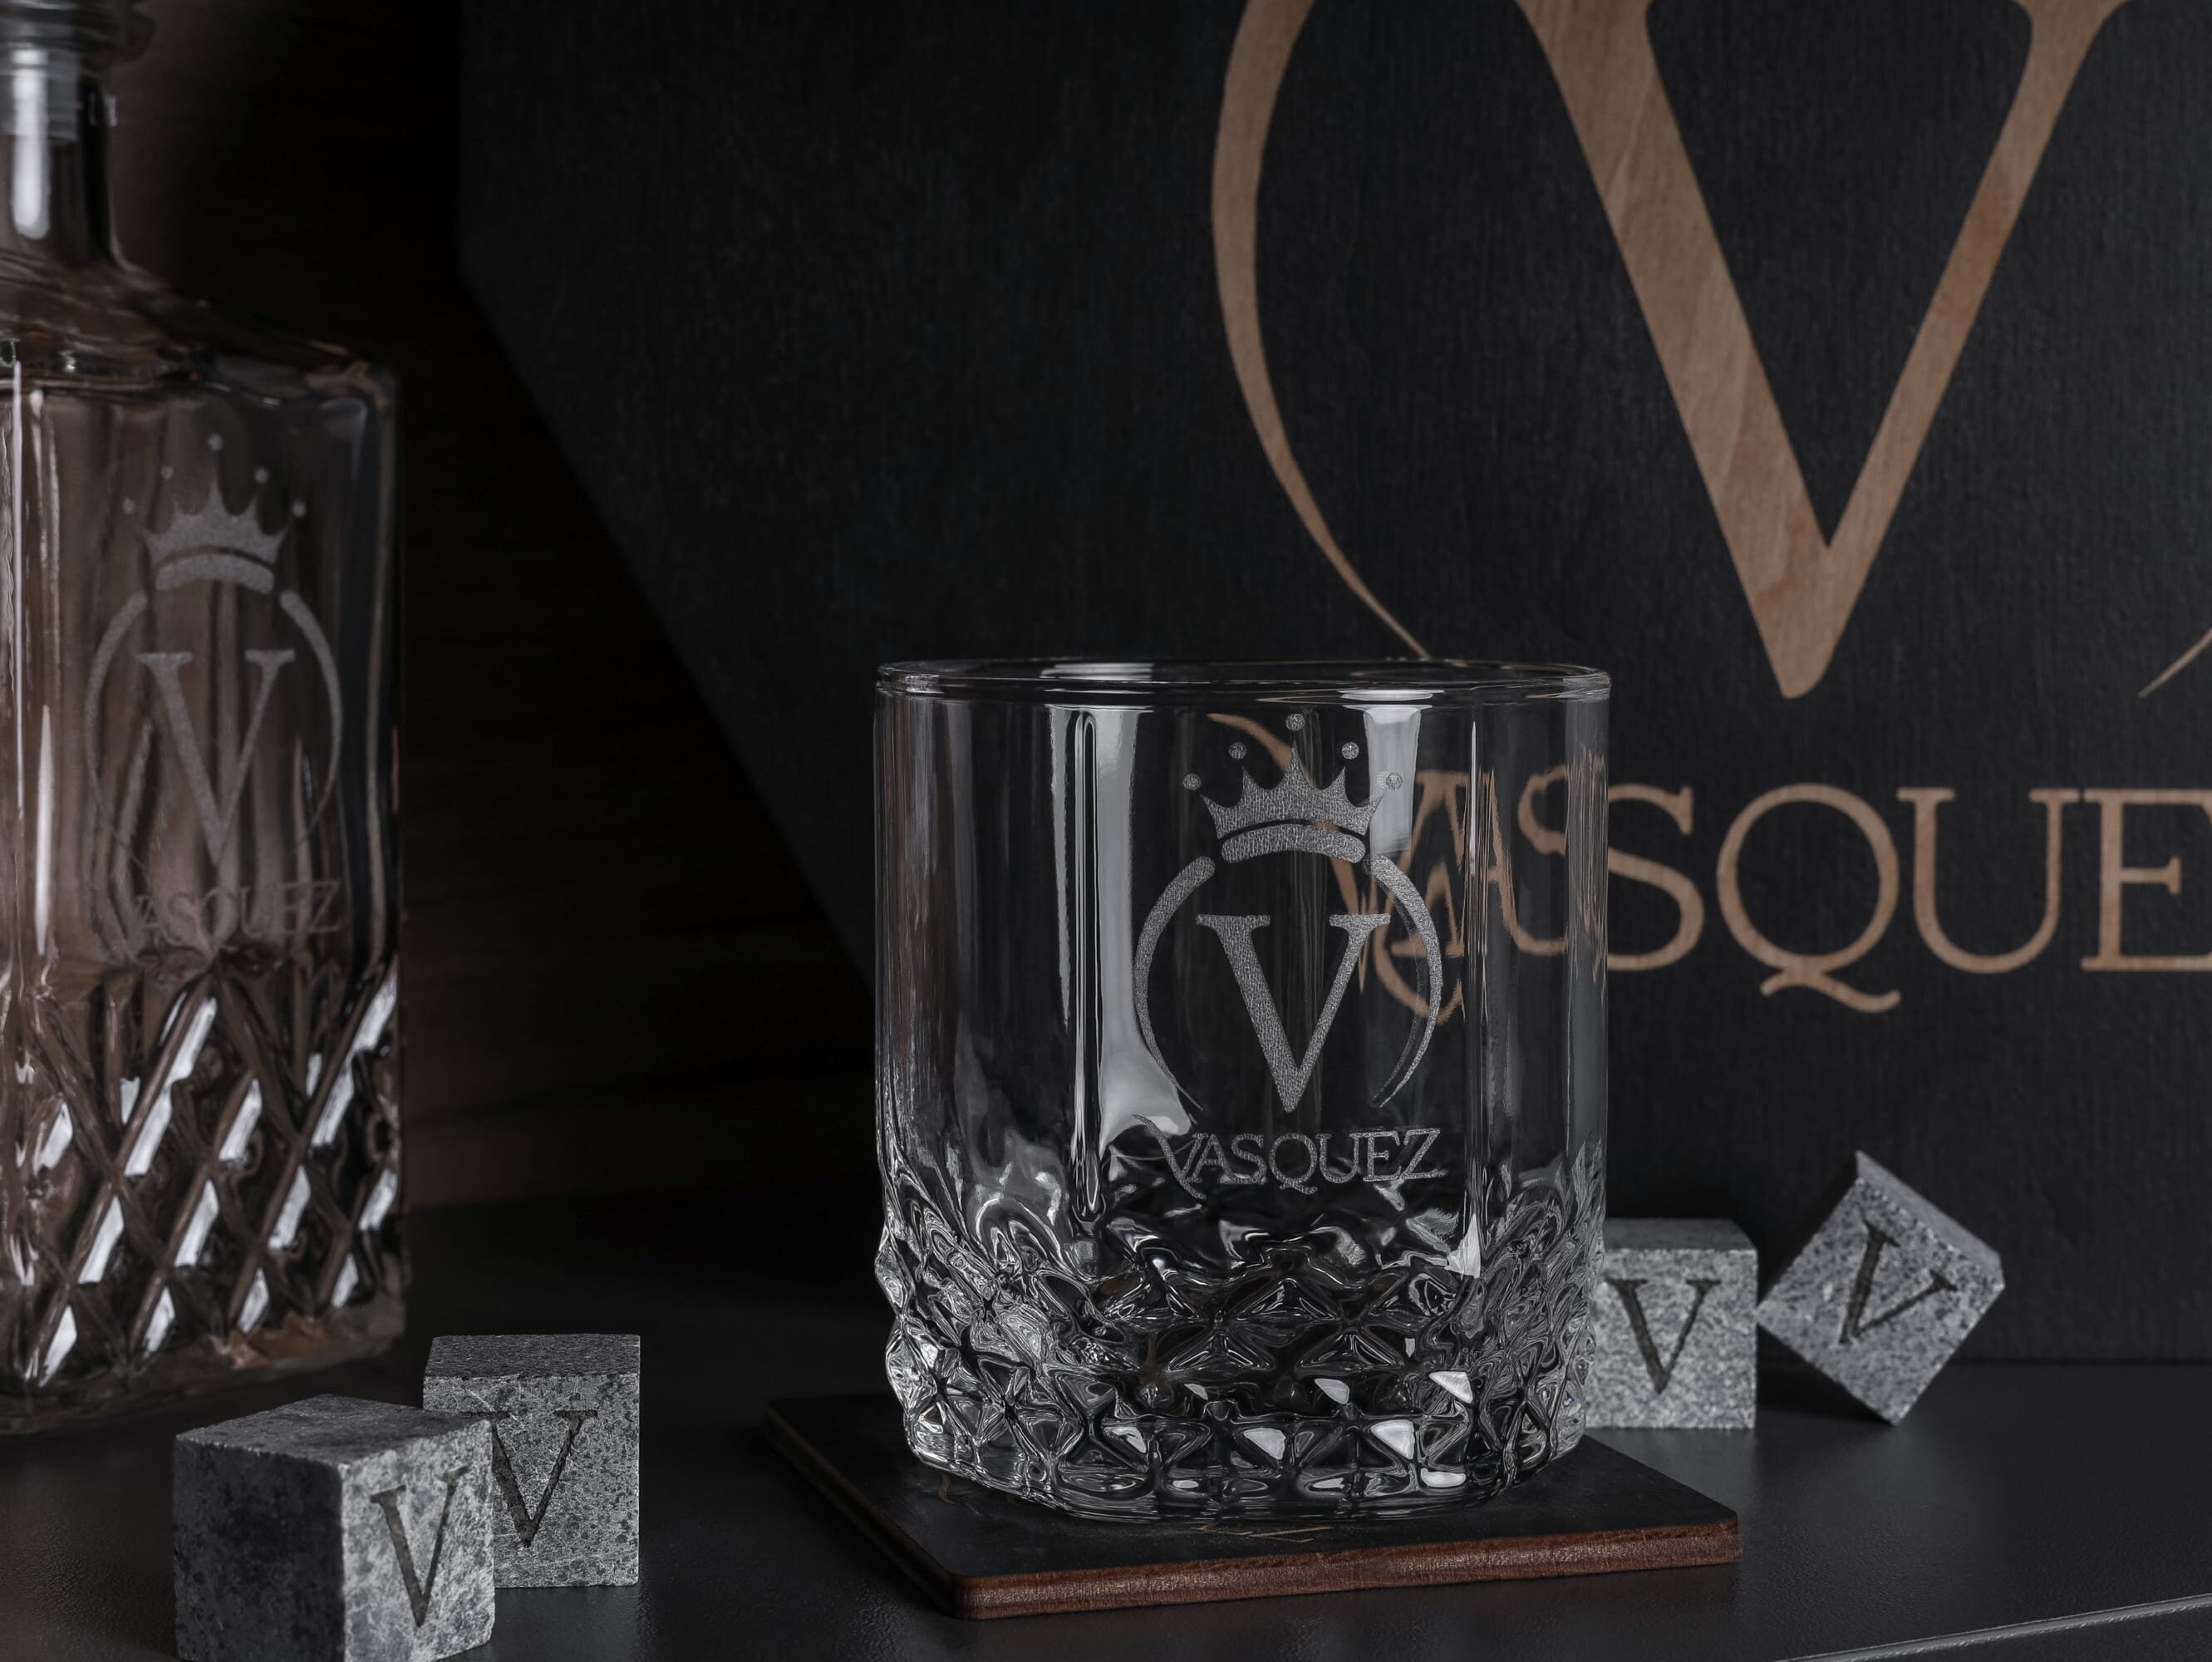 GoToLuckyShop + Star Wars Whiskey Decanter & Glasses Set